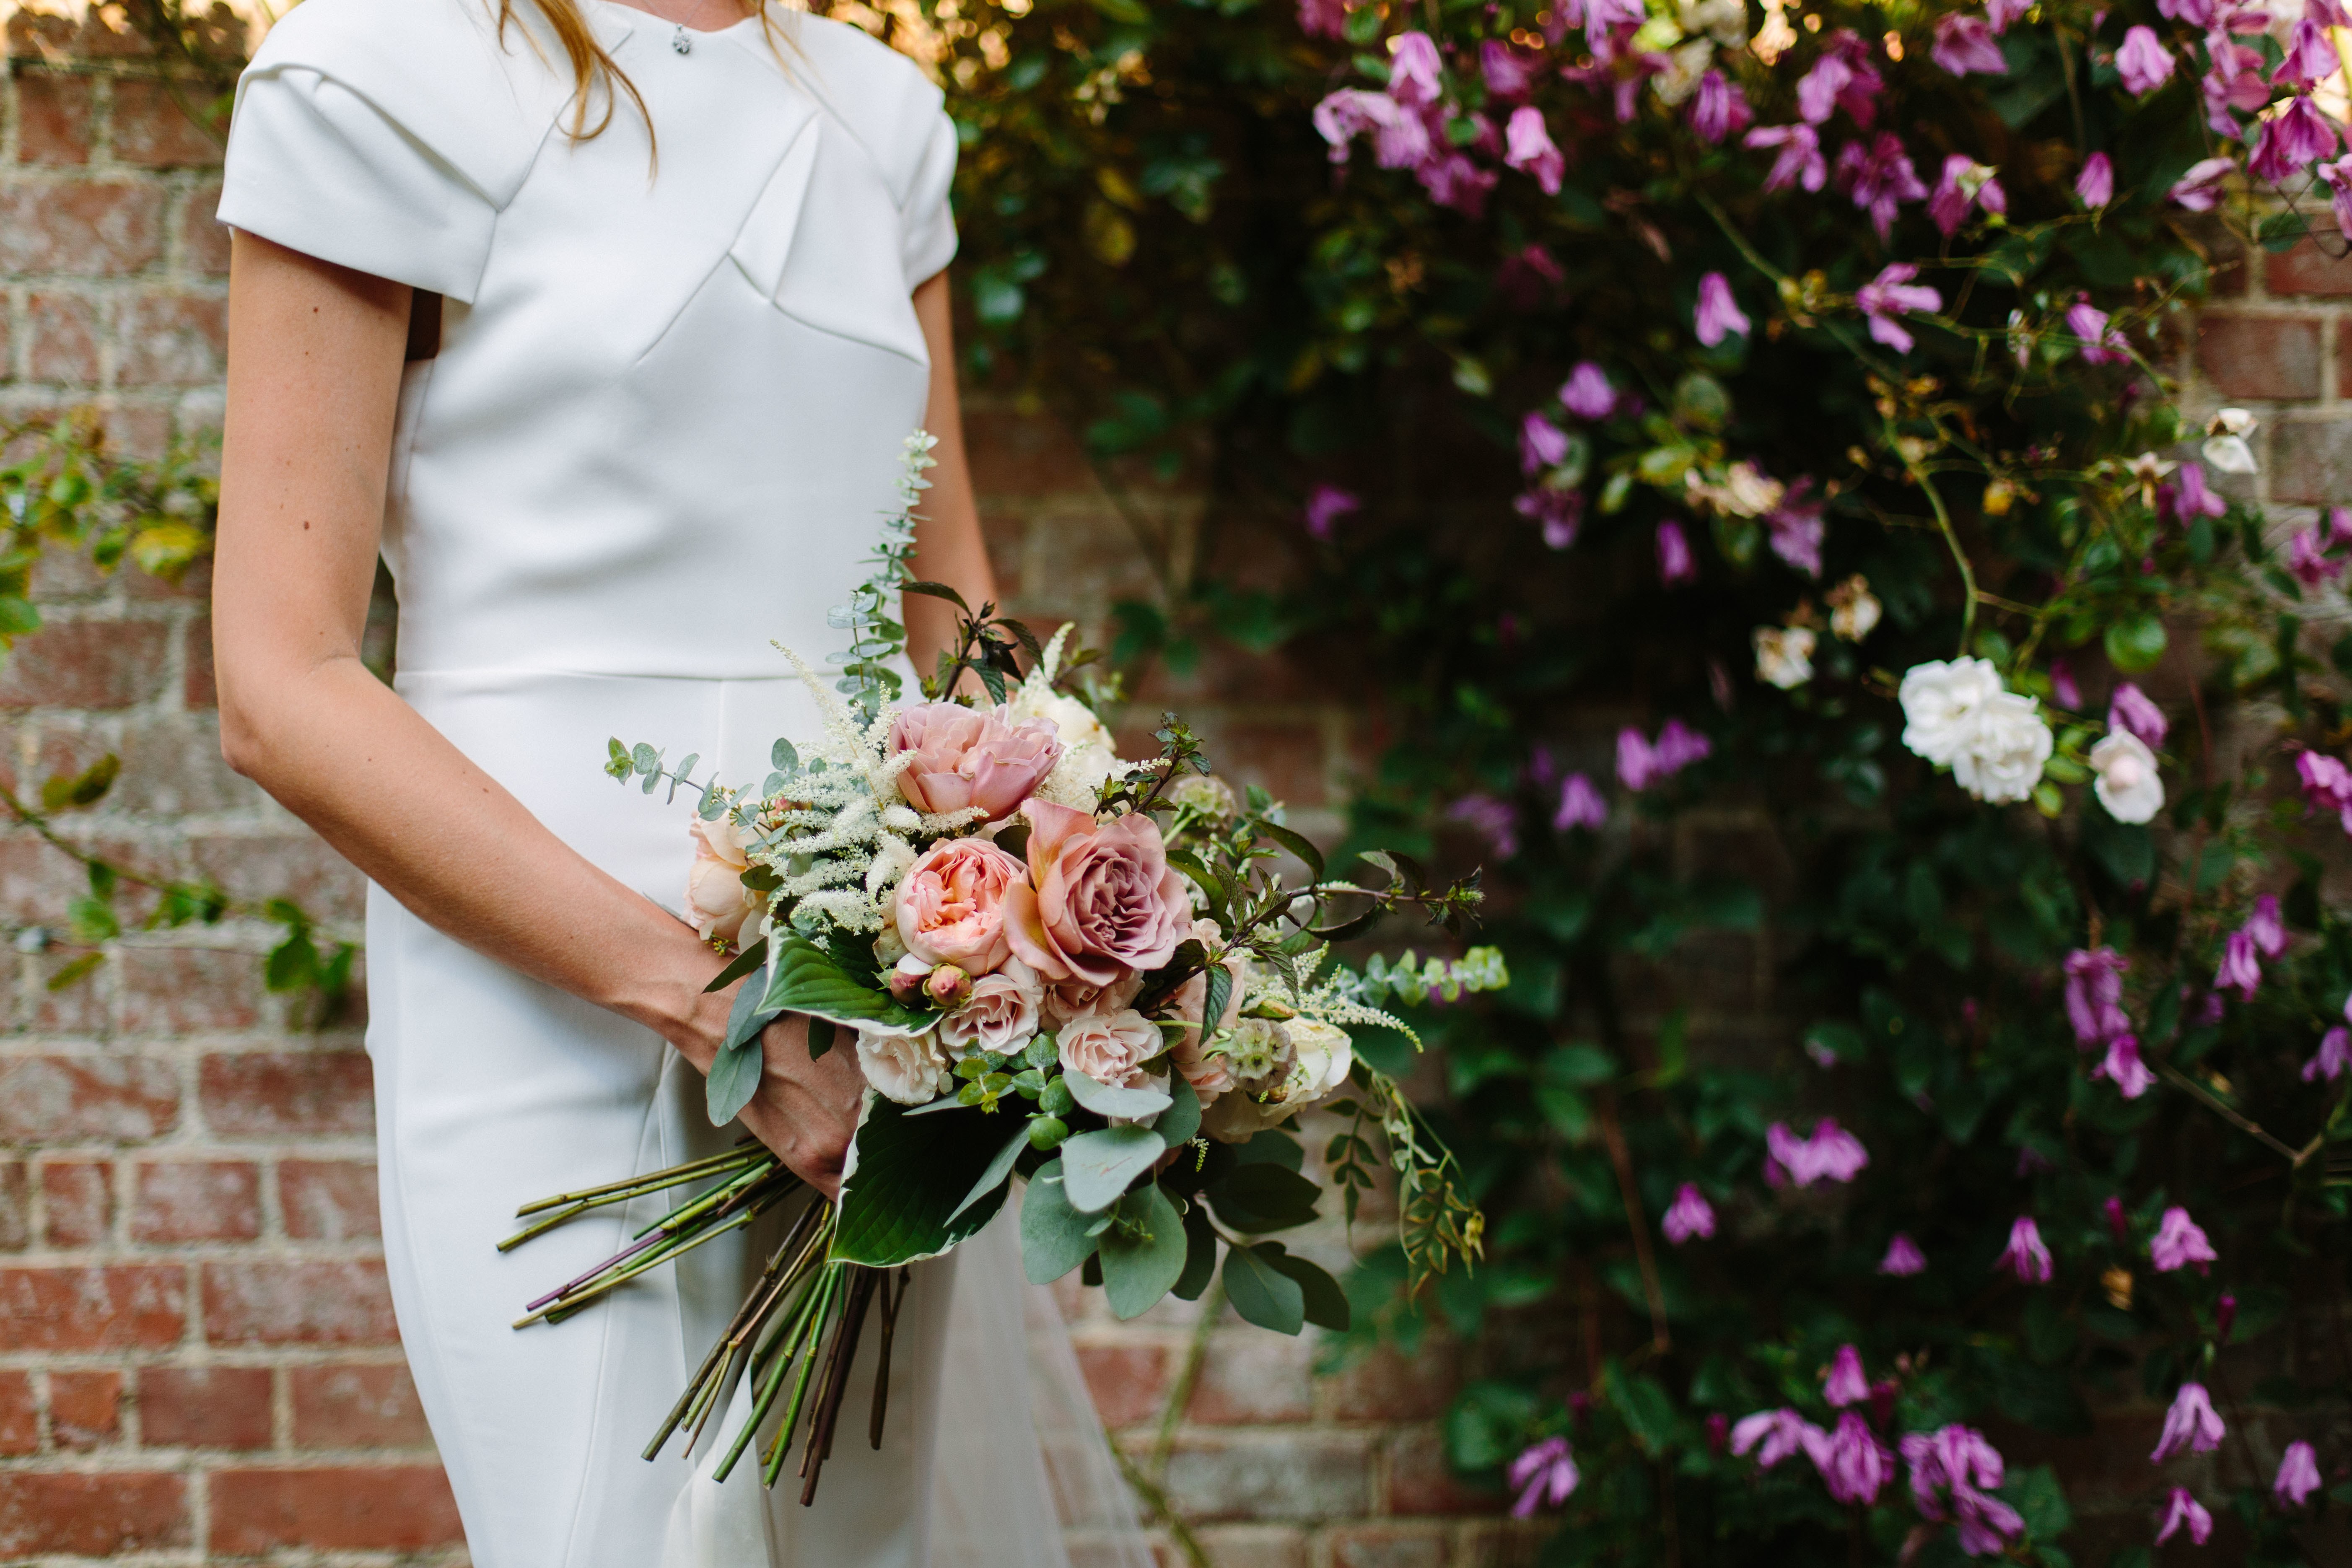 Wedding Flowers & Bouquet Ideas | Brides